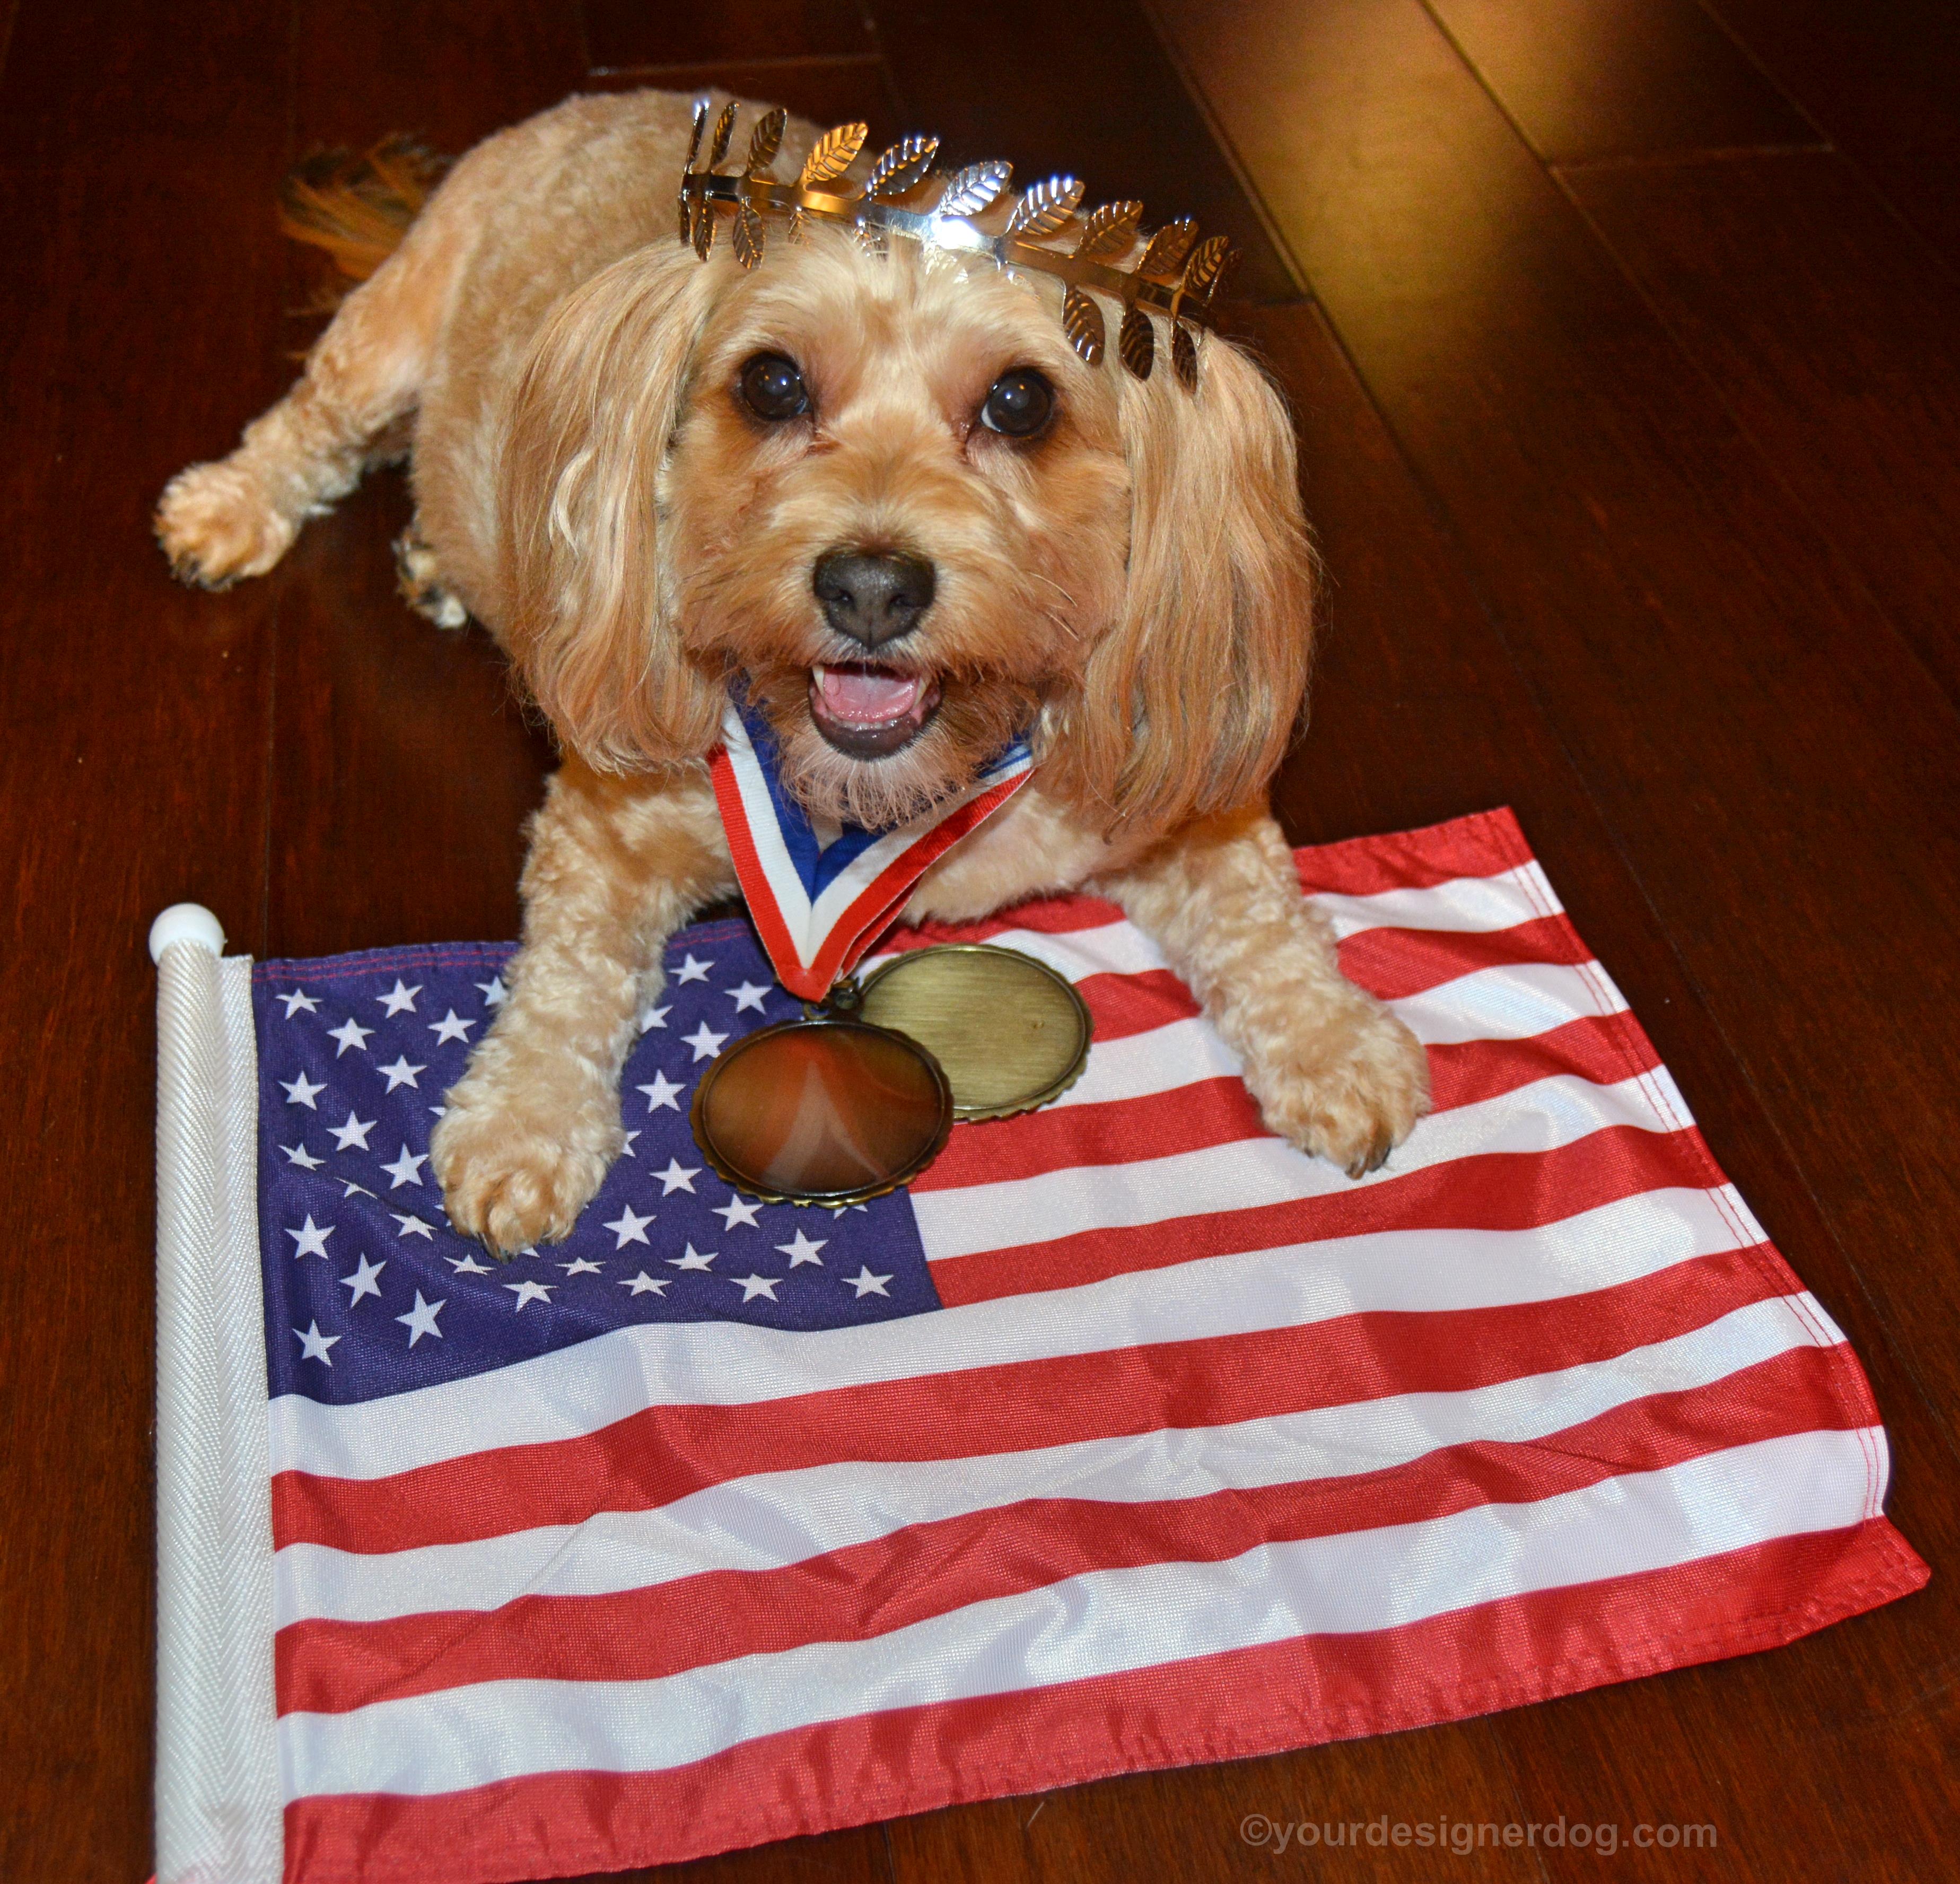 dogs, designer dogs, yorkipoo, yorkie poo, patriotic, athlete, olympics, medalist, crown